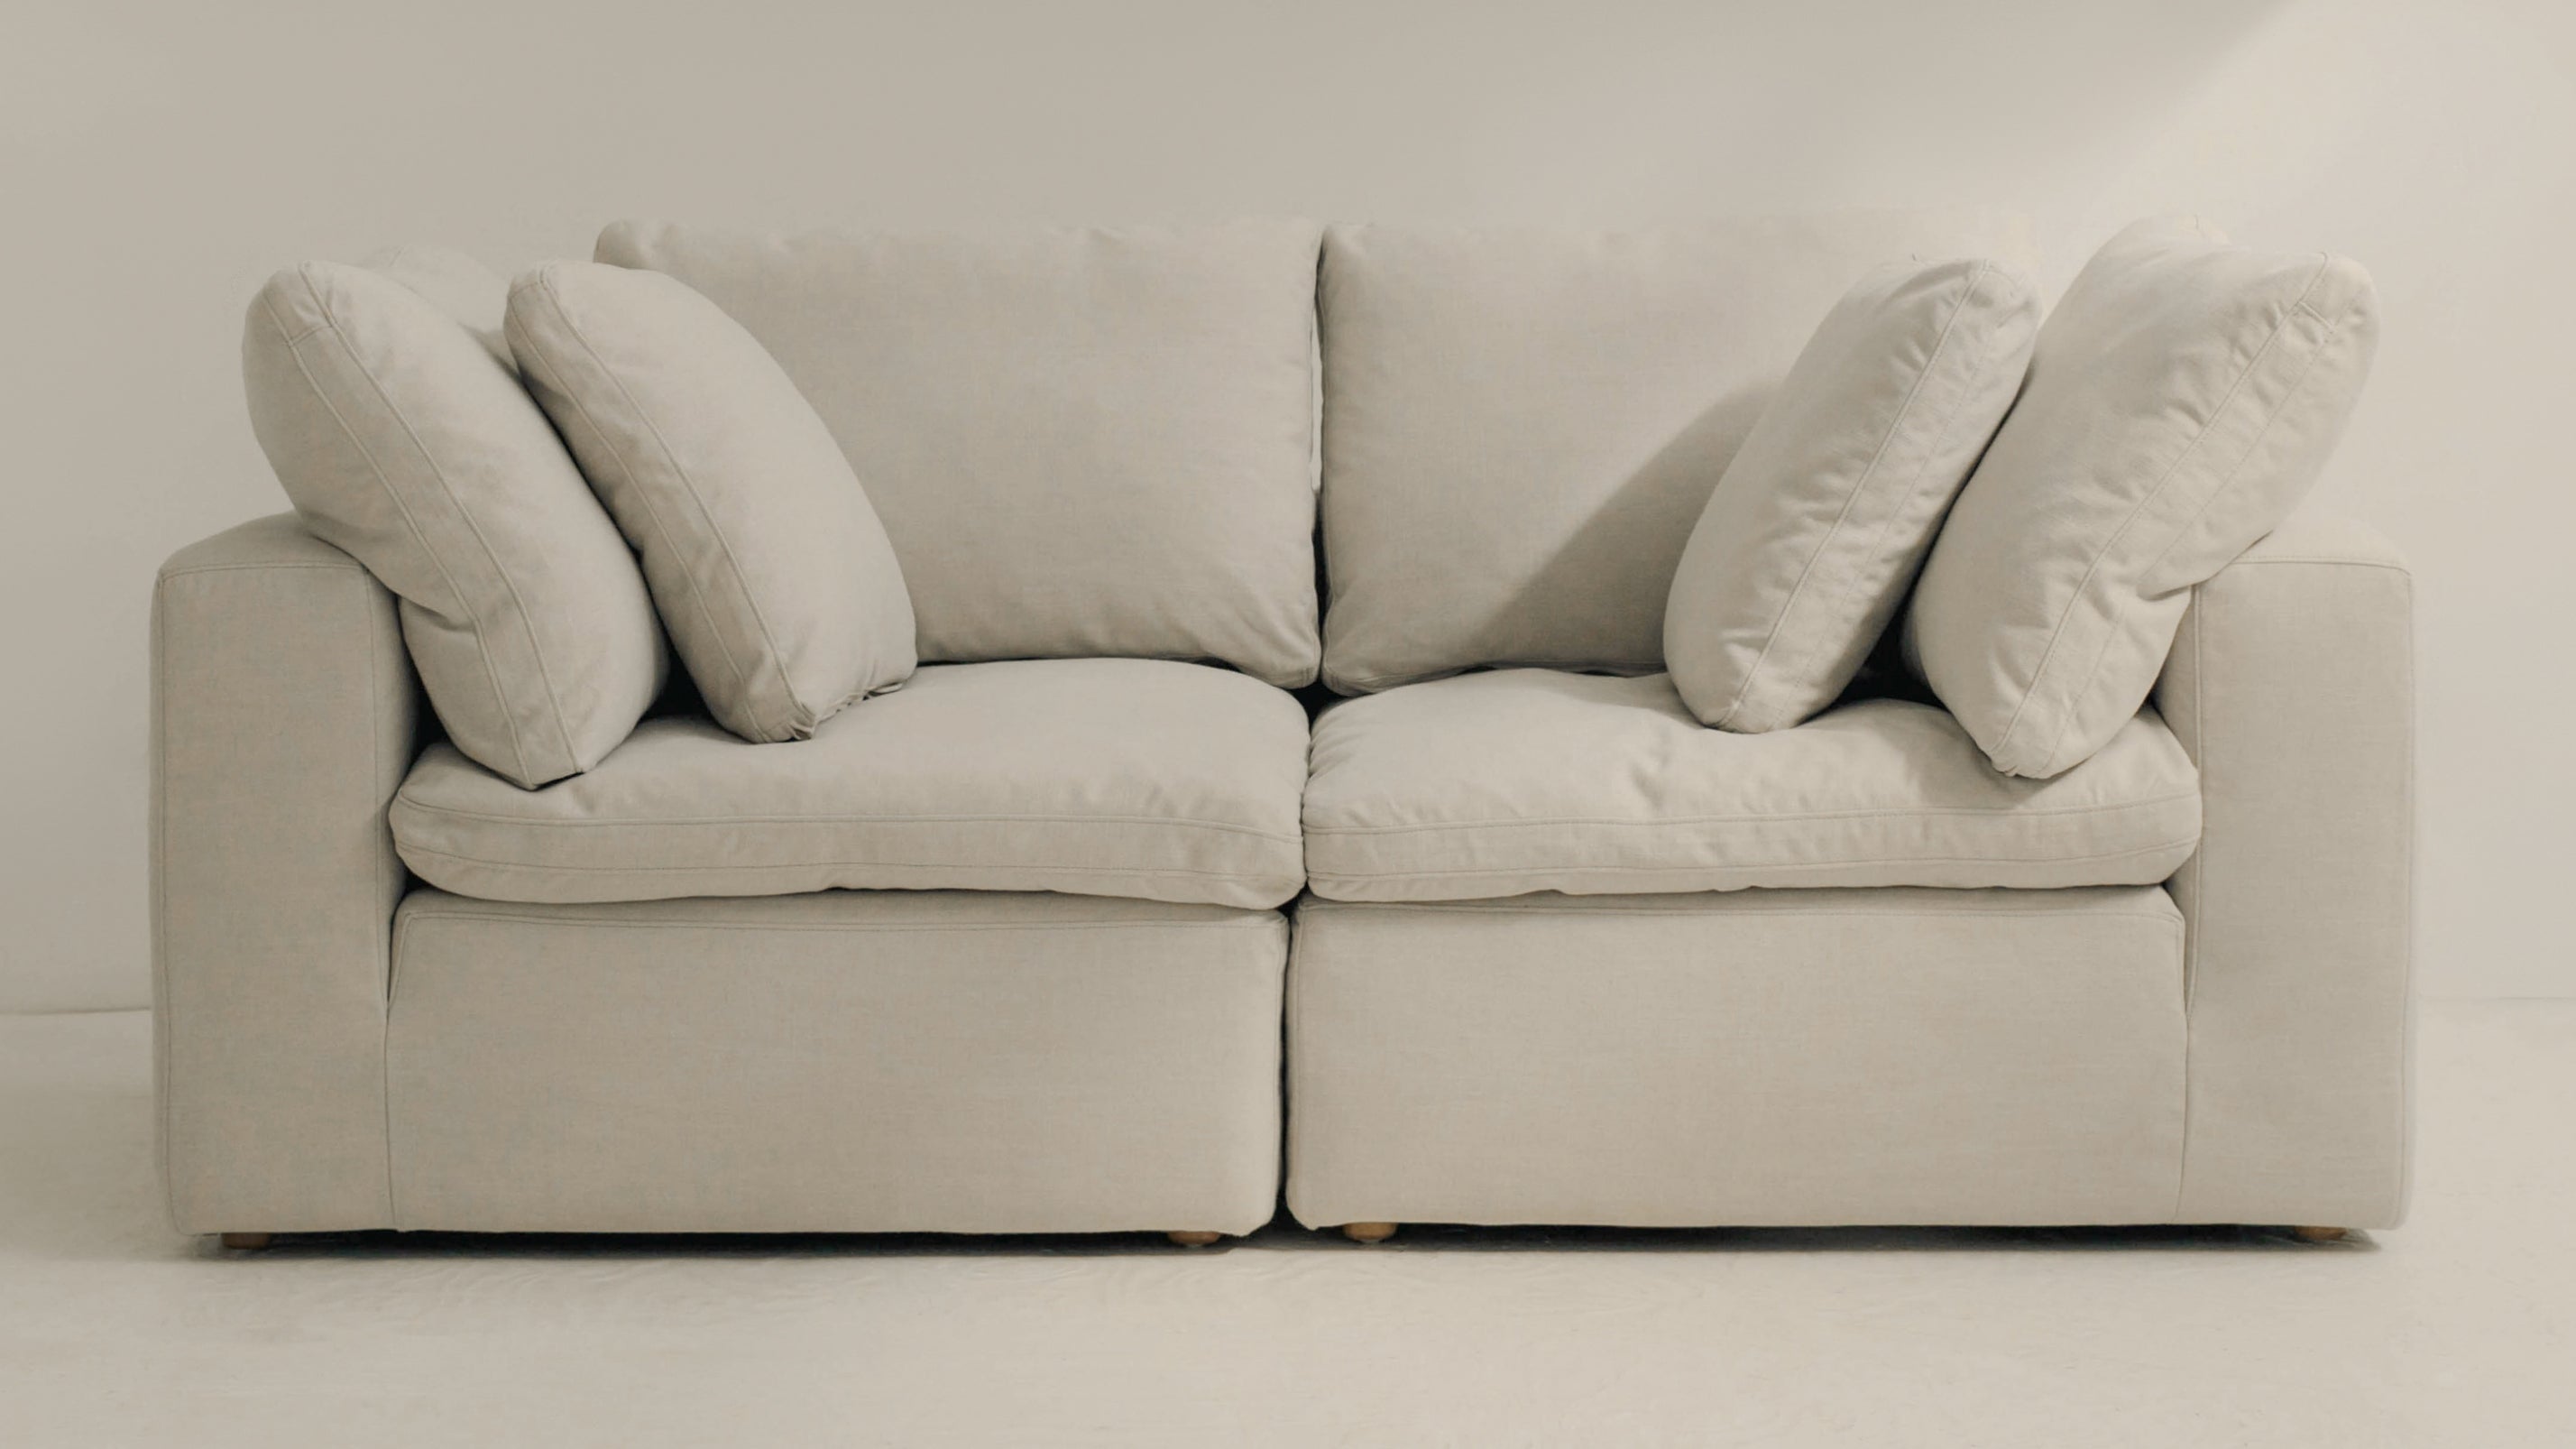 Movie Night™ 2-Piece Modular Sofa, Standard, Clay - Image 2